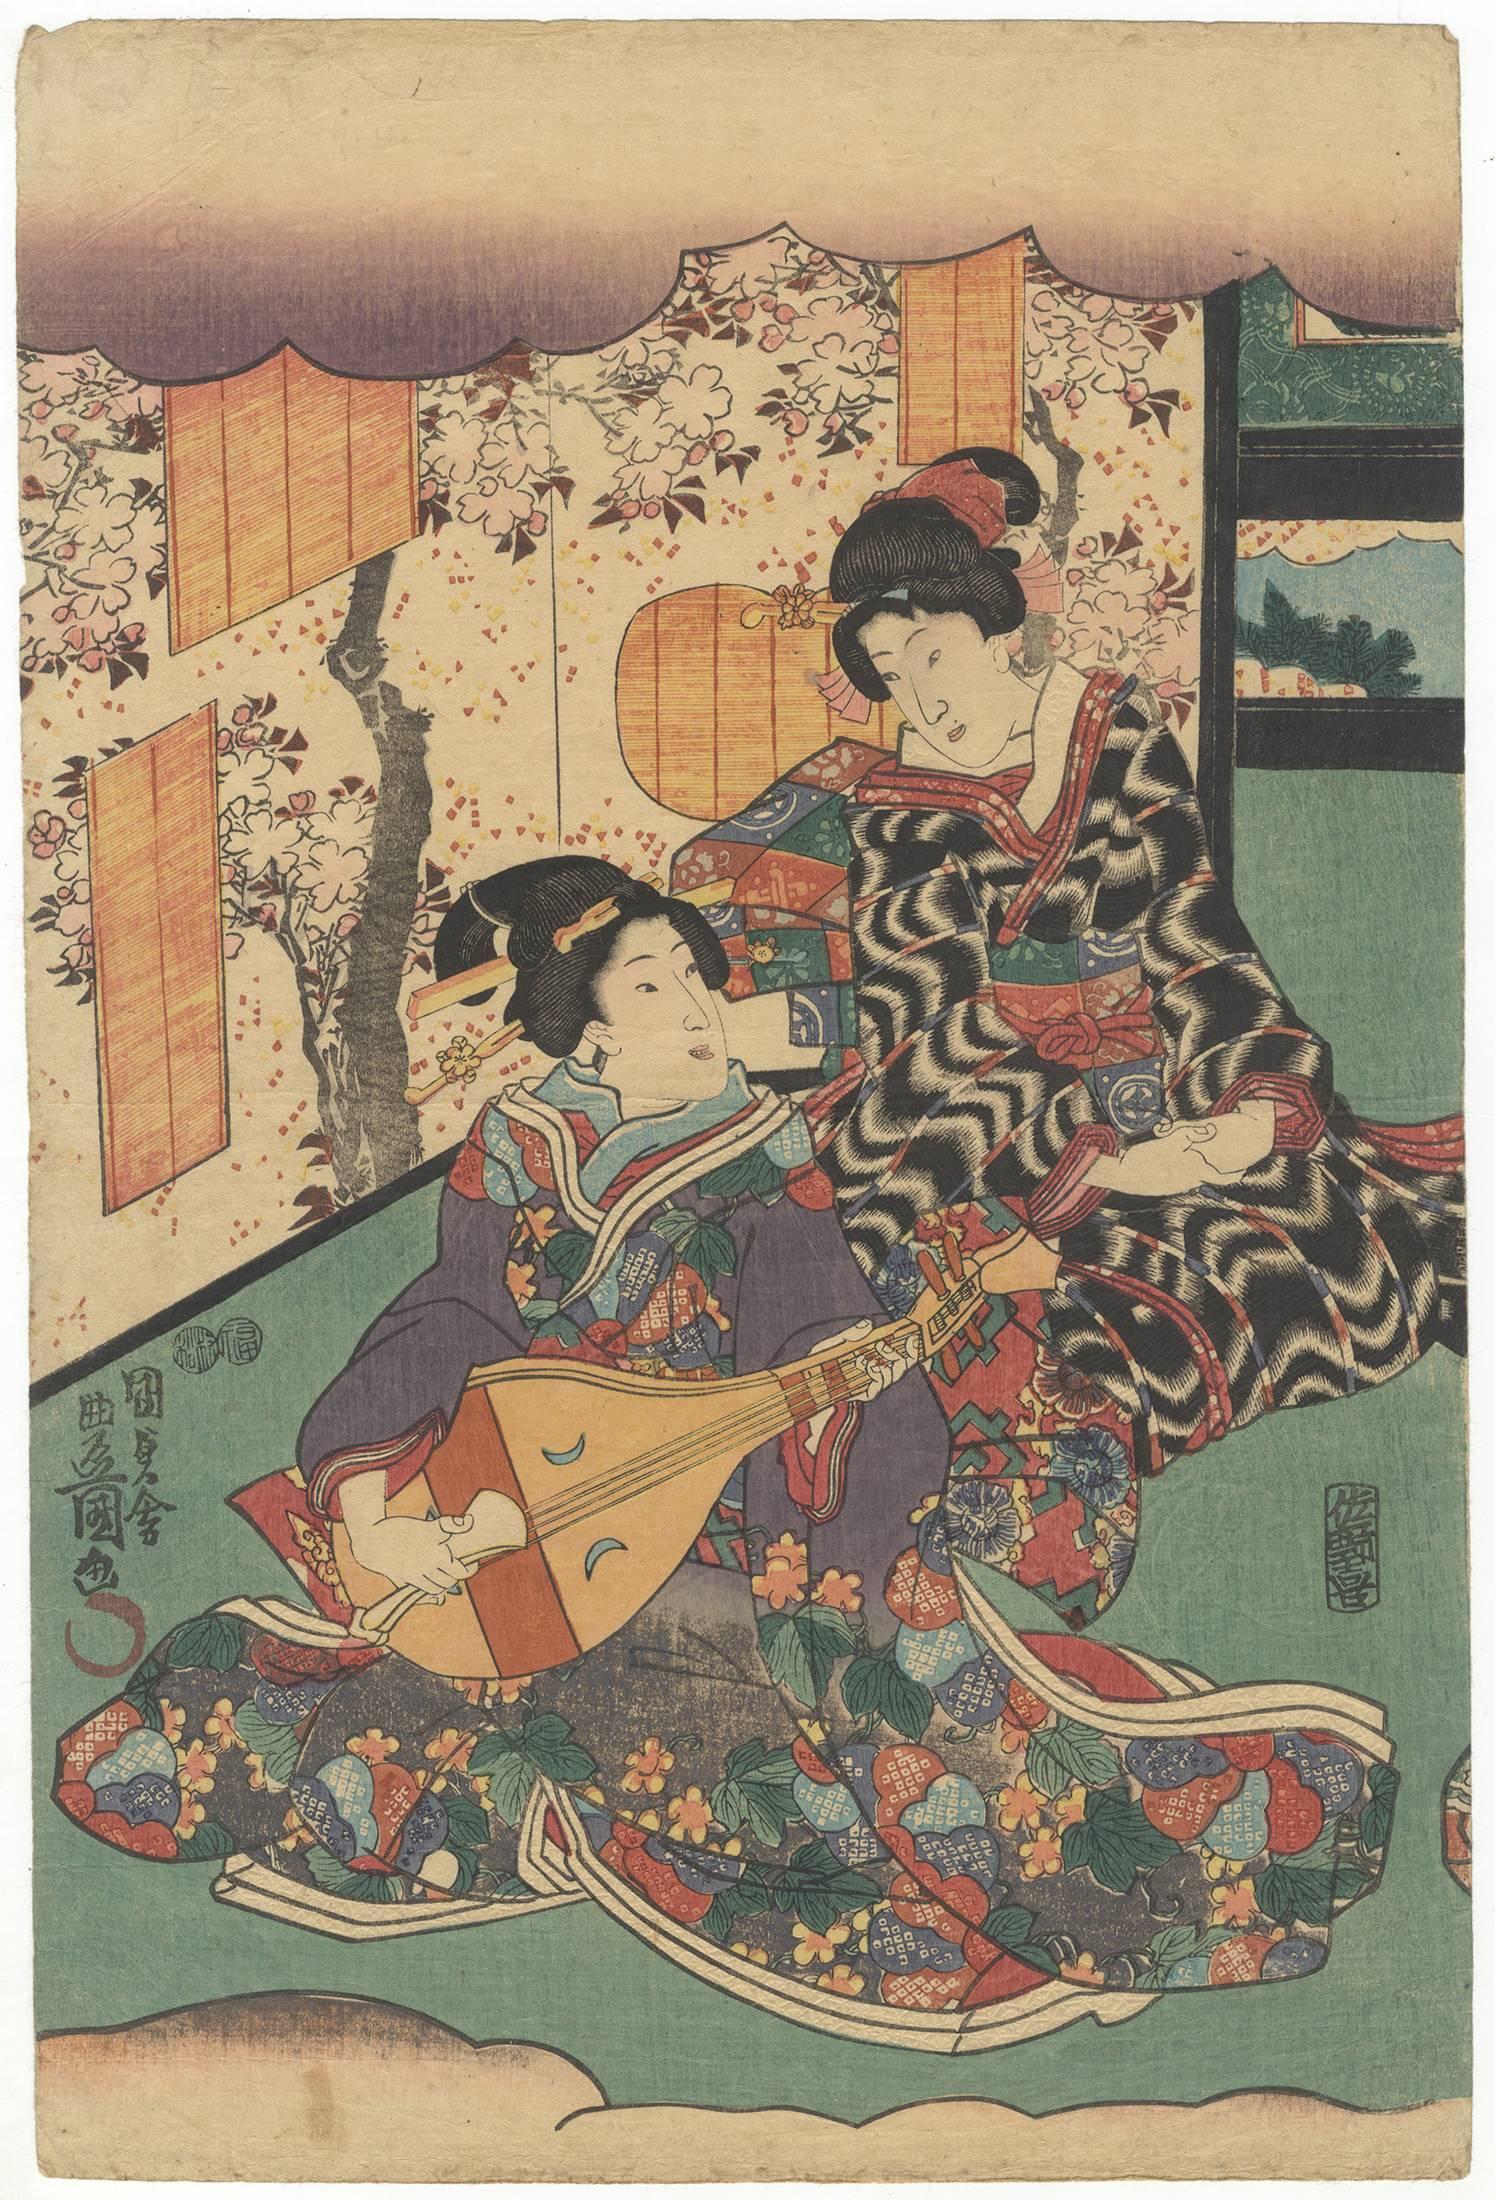 Artist: Utagawa Toyokuni III (1786-1864)
Title: Prince Genji Playing a Musical Instrument and Accompanied by a Court Lady. Triptych.
Publisher: Sanoya Kihei
Date: circa 1847-1852
Size: (R) 25.7 x x 38.3 (C) 25.7 x 38 (L) 25.5 x 38.2